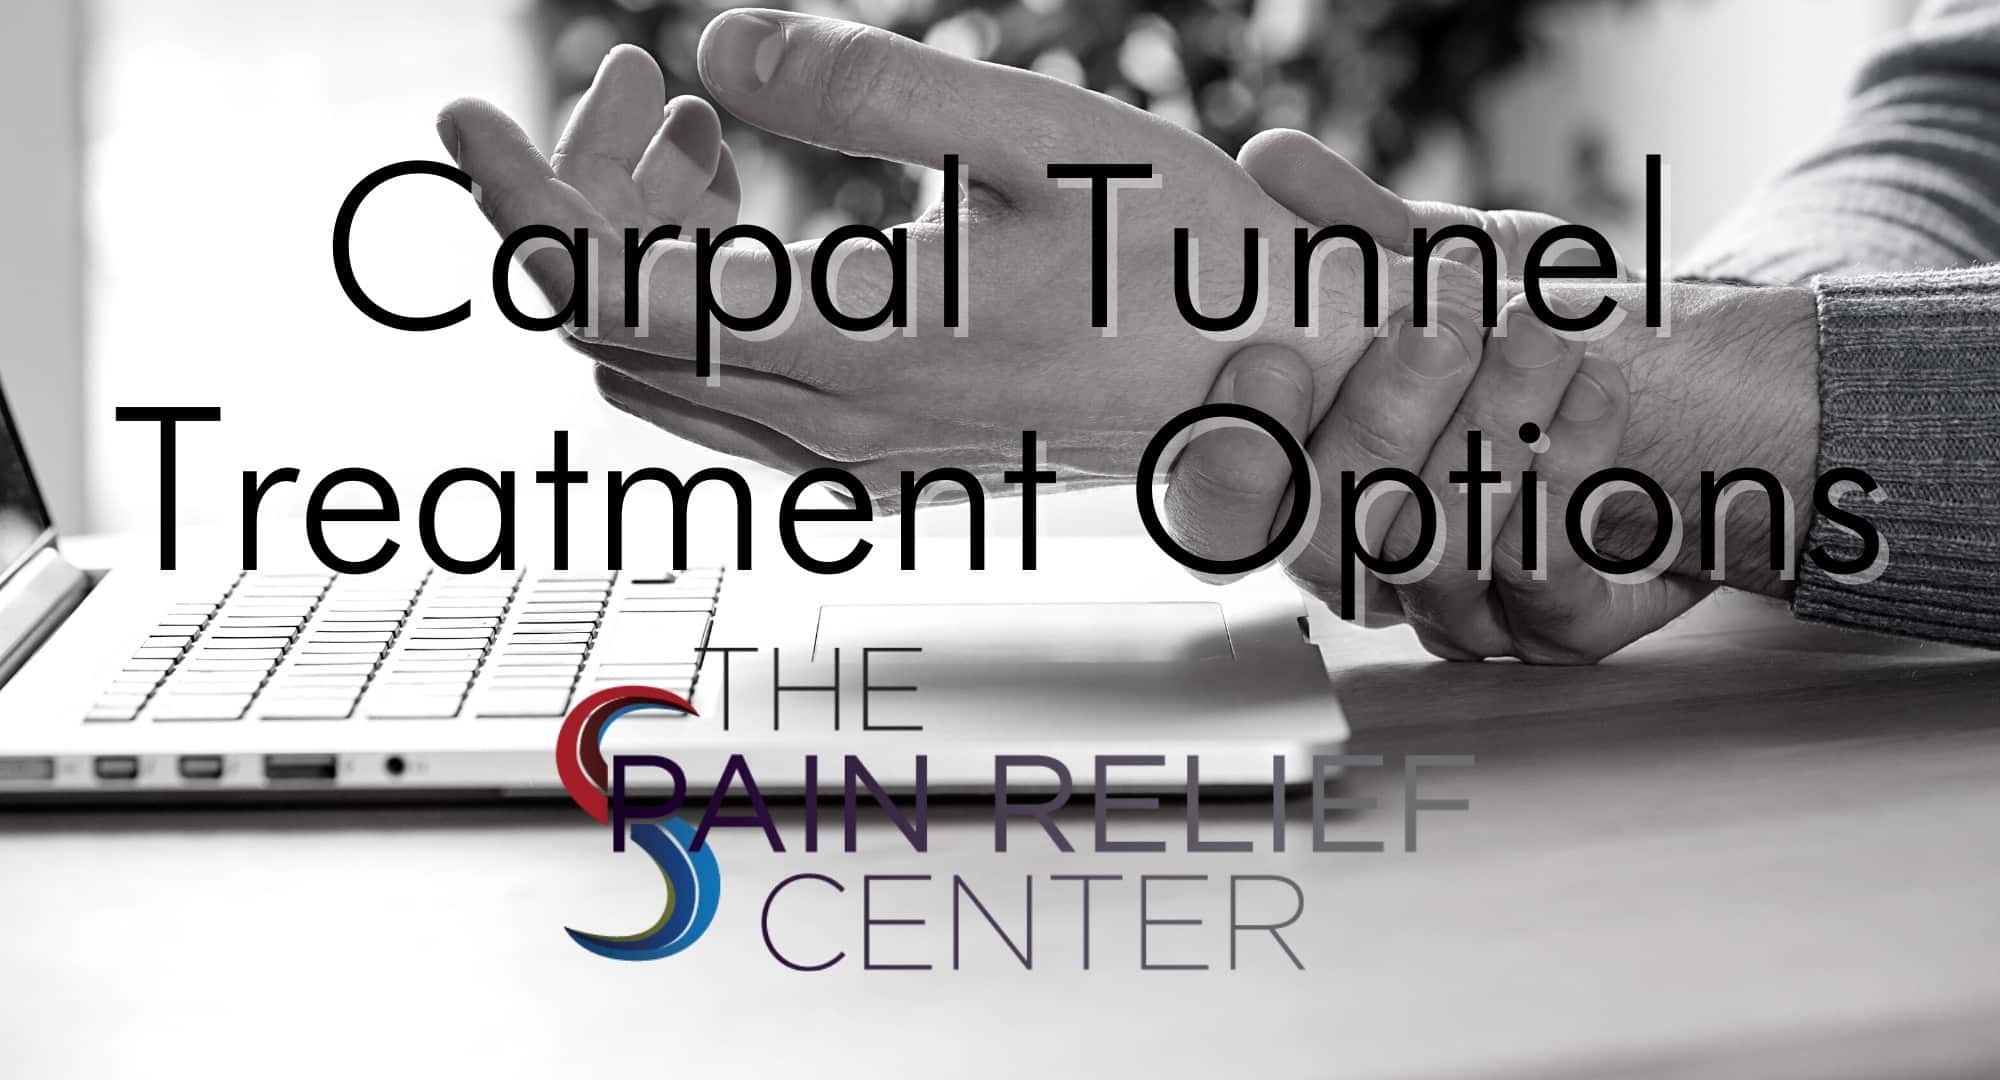 Carpal Tunnel Treatment